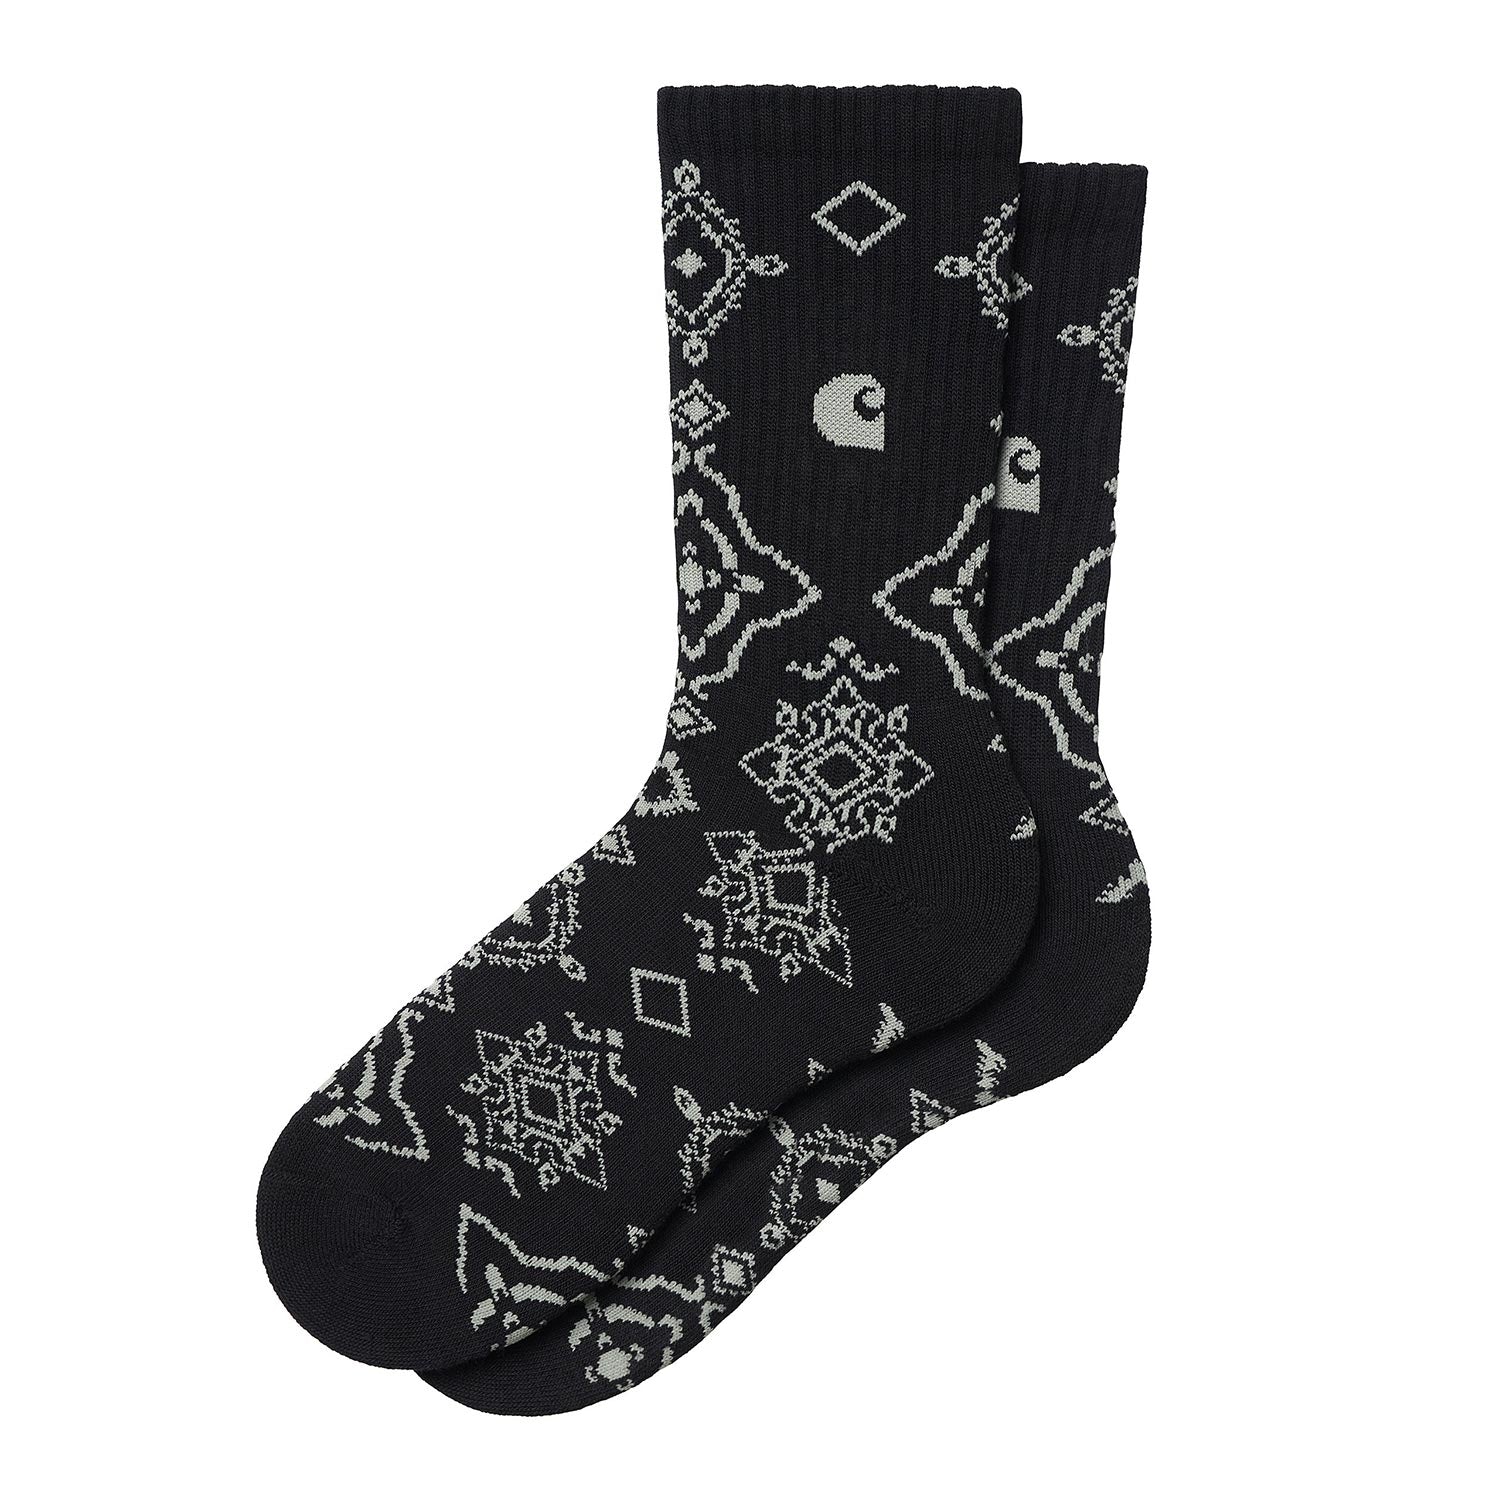 Intarsia-knit ankle socks